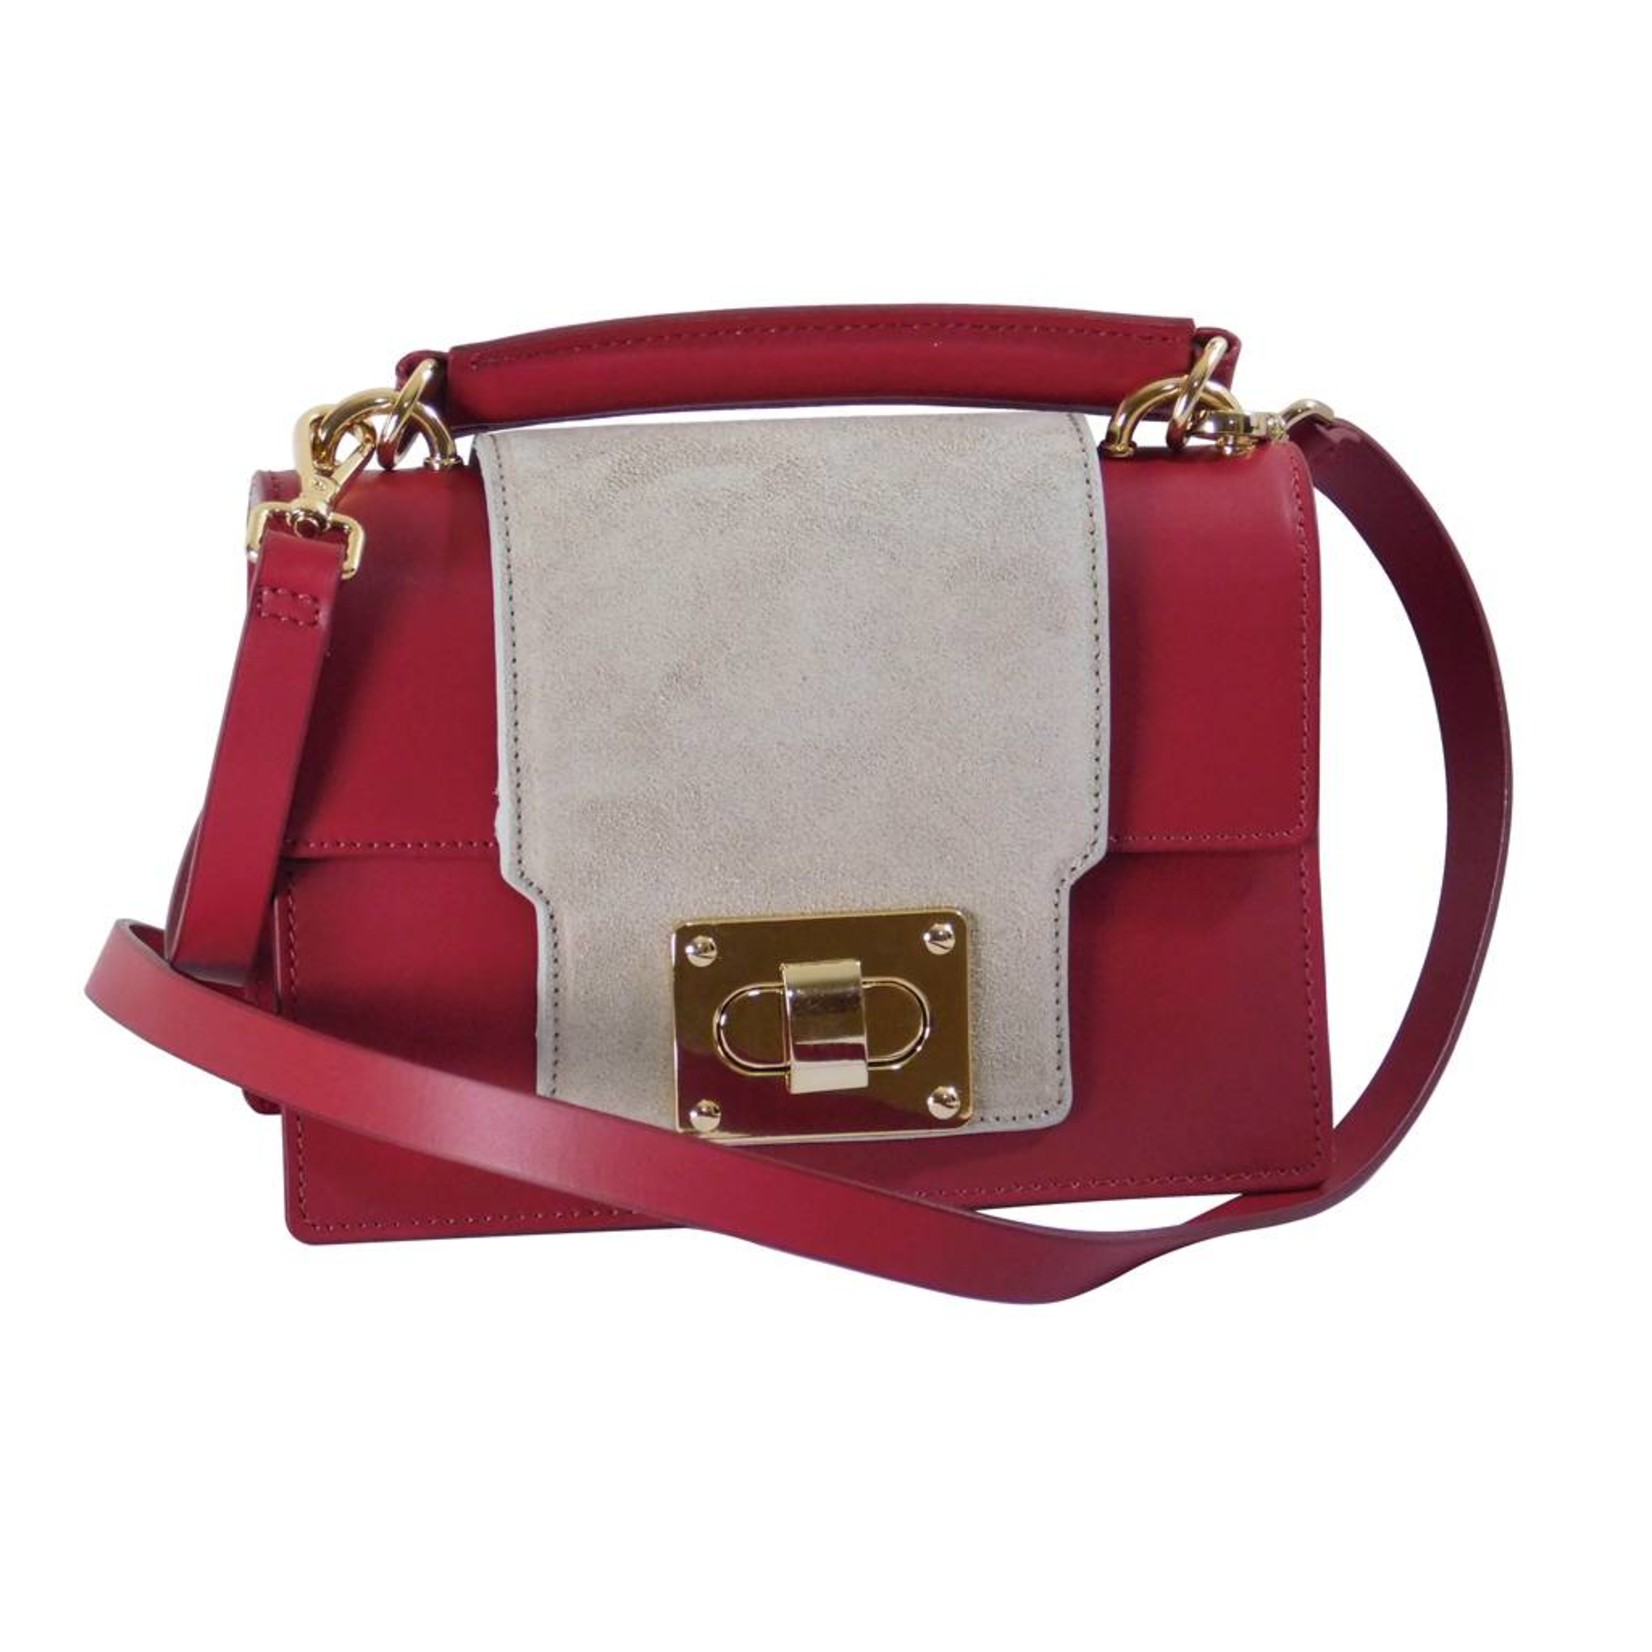 Made in Italia Kleine Handtasche Damen Leder - Rot Grau - Schultergurt Abnehmbar - Drehverschluss